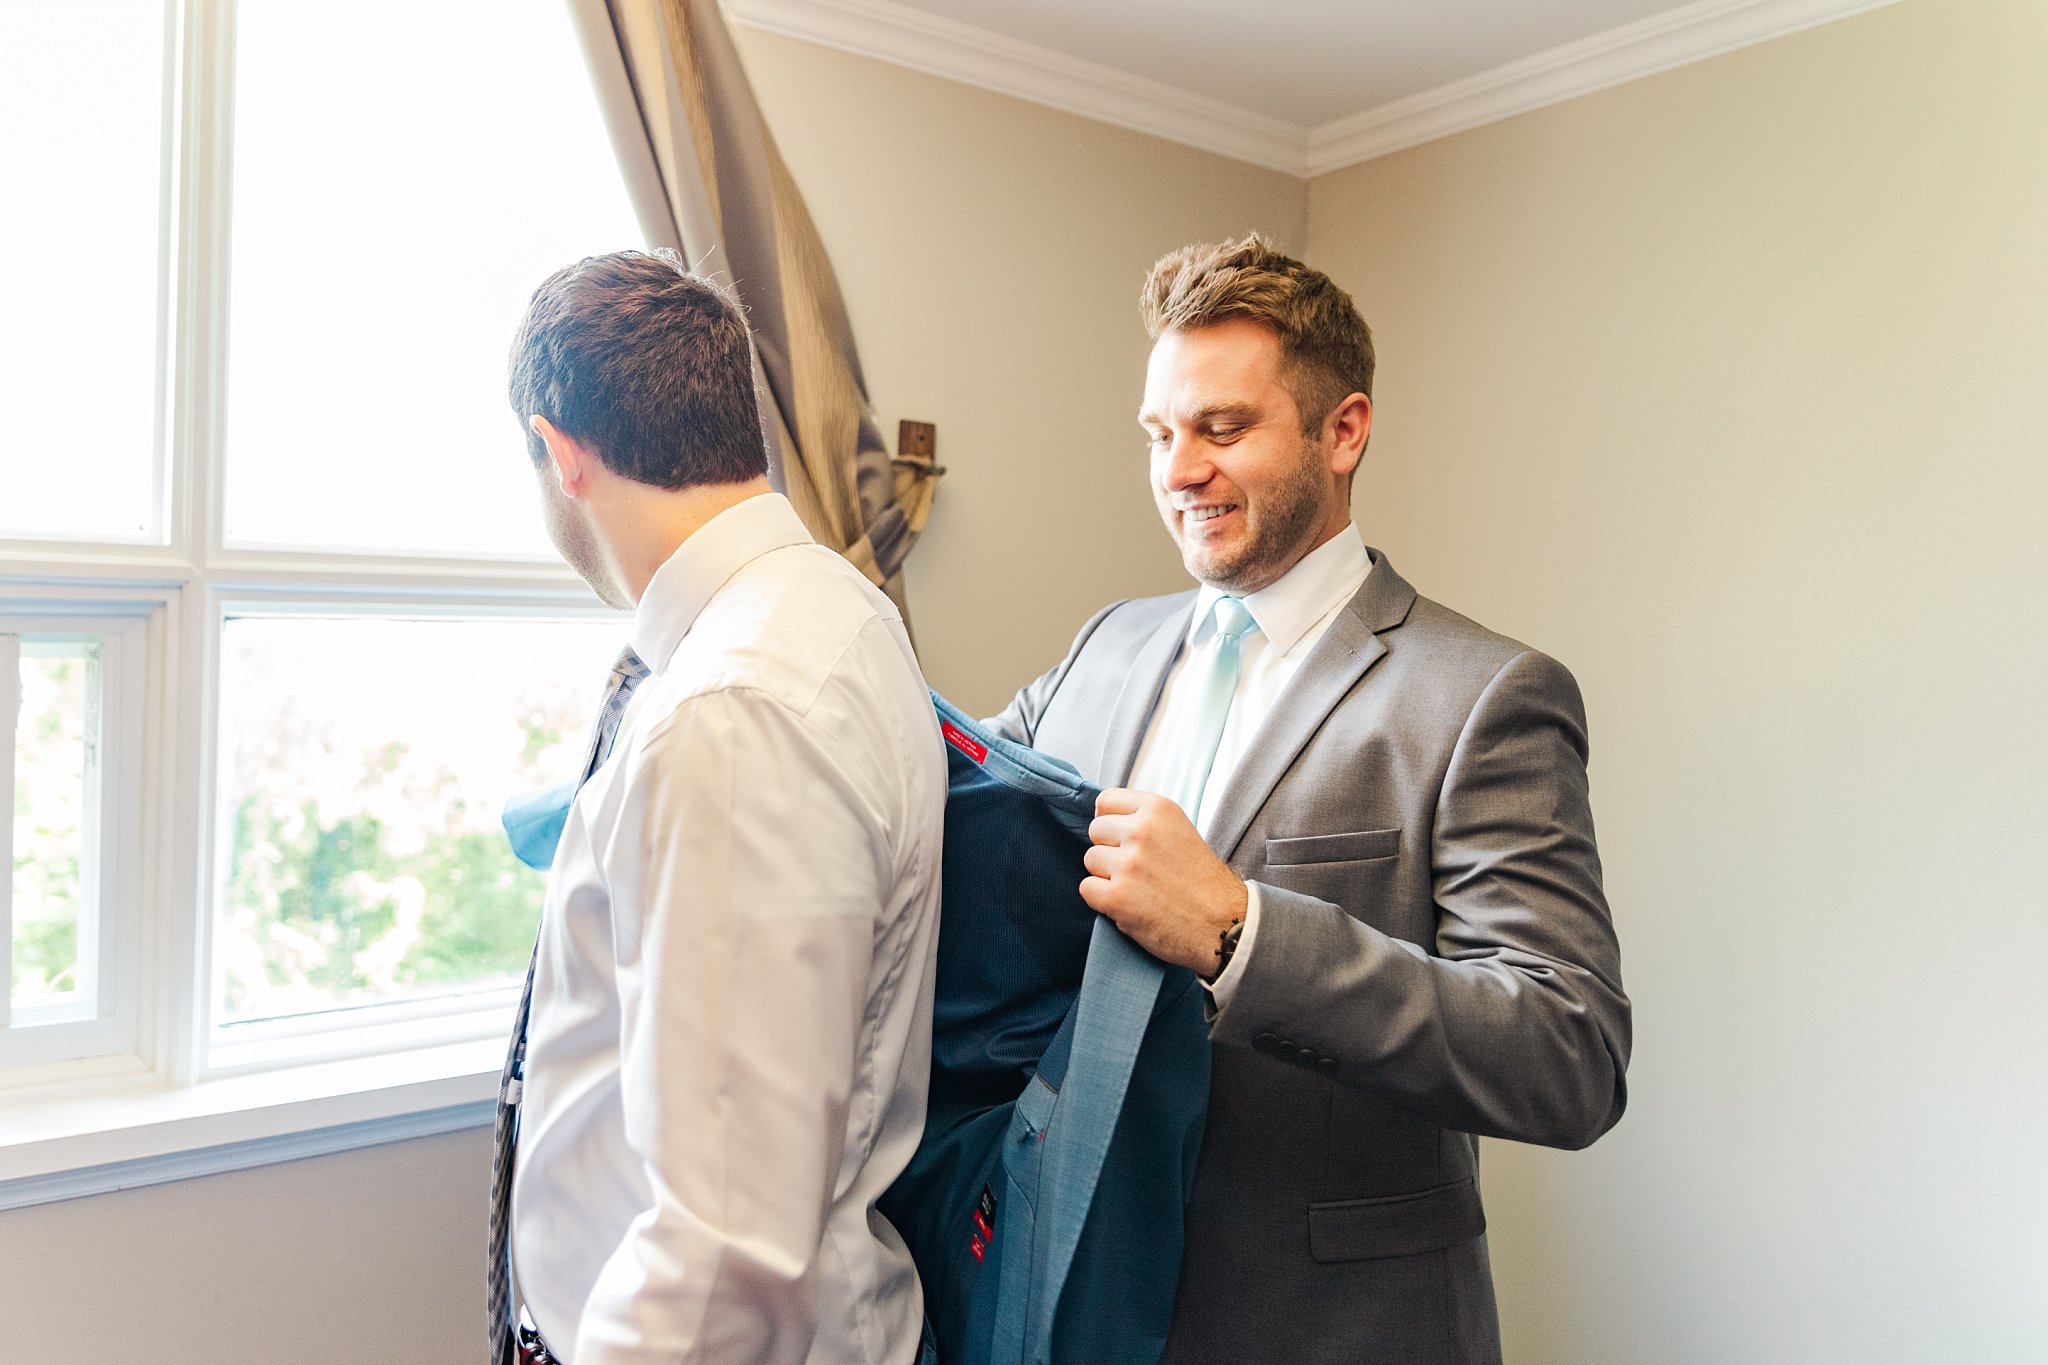 a groomsman helps a groom get his suit jacket on